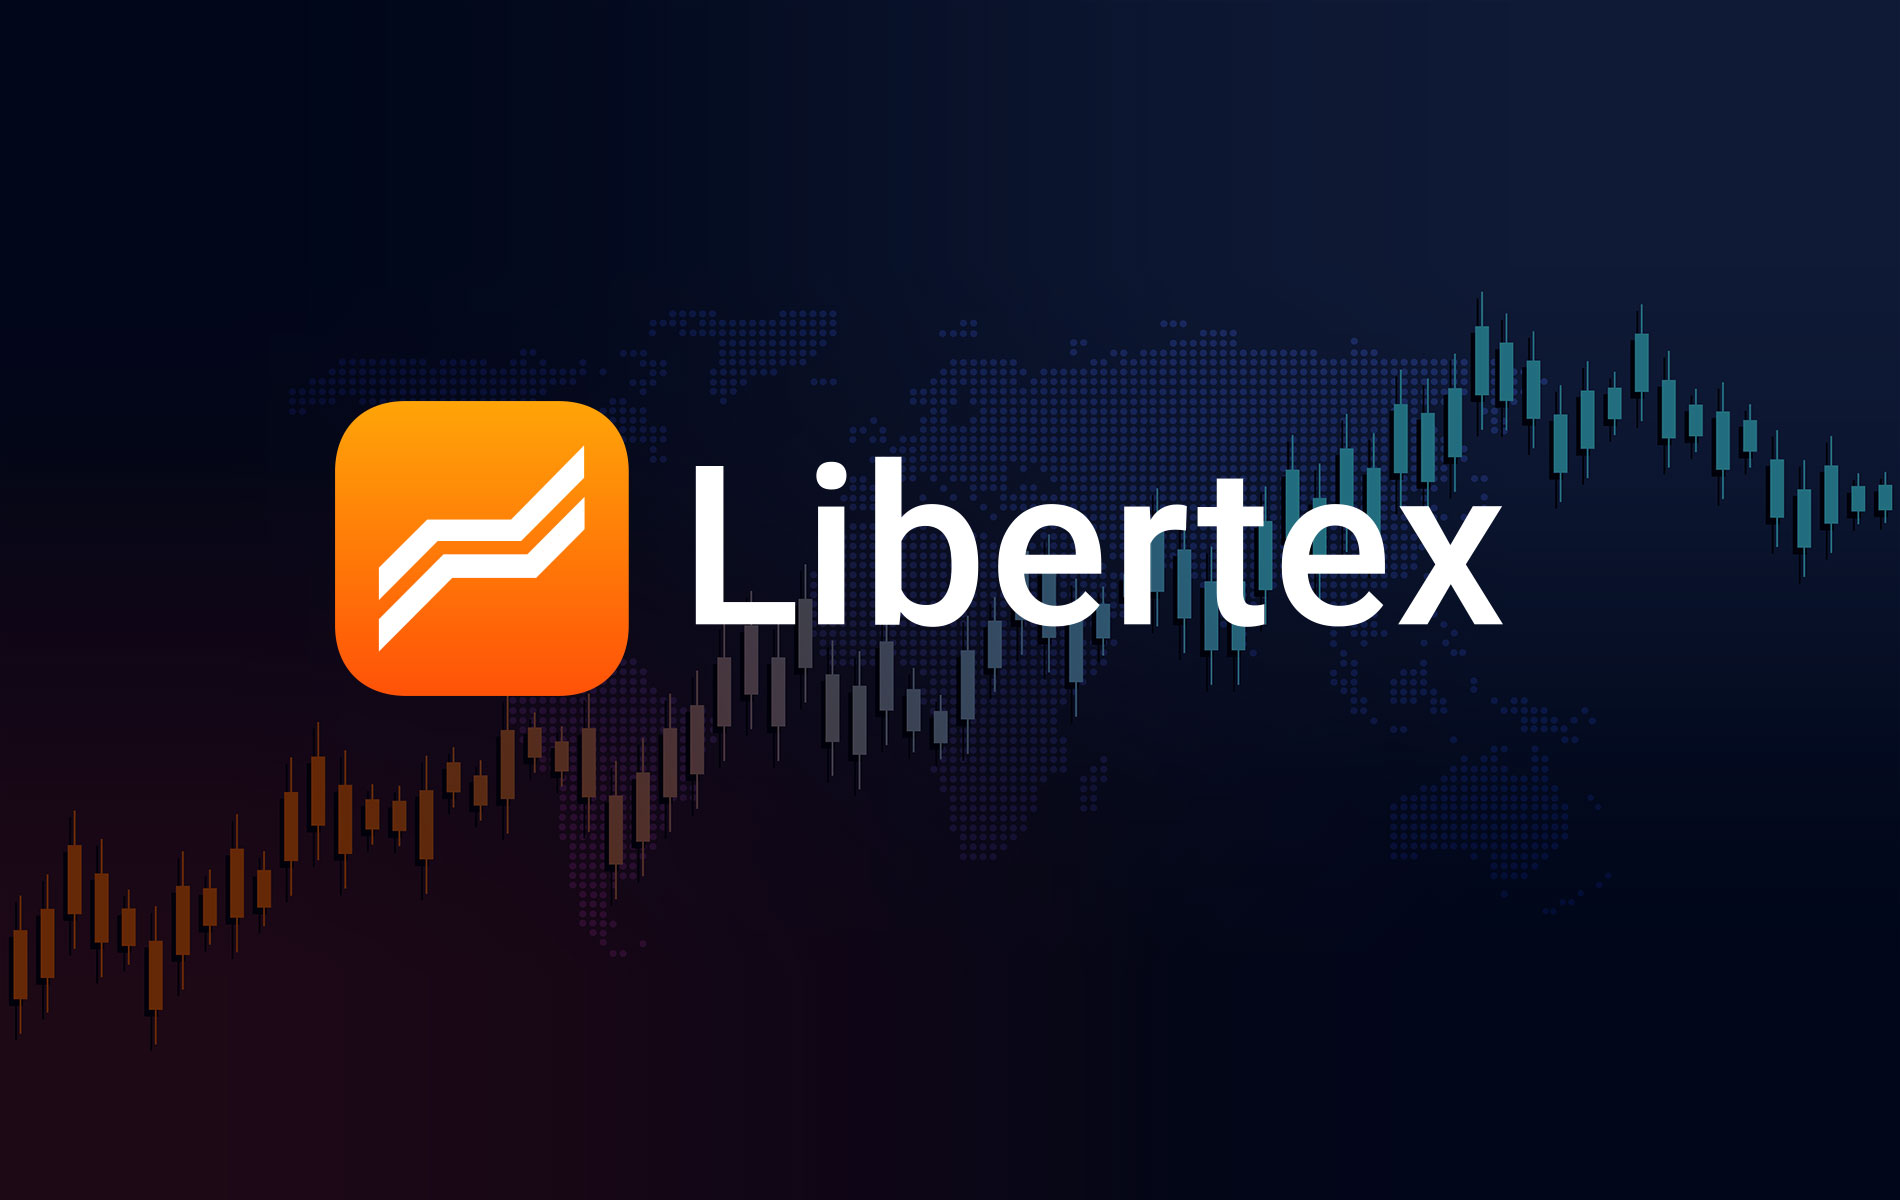 Libertex Group, Monday, December 21, 2020, Press release picture